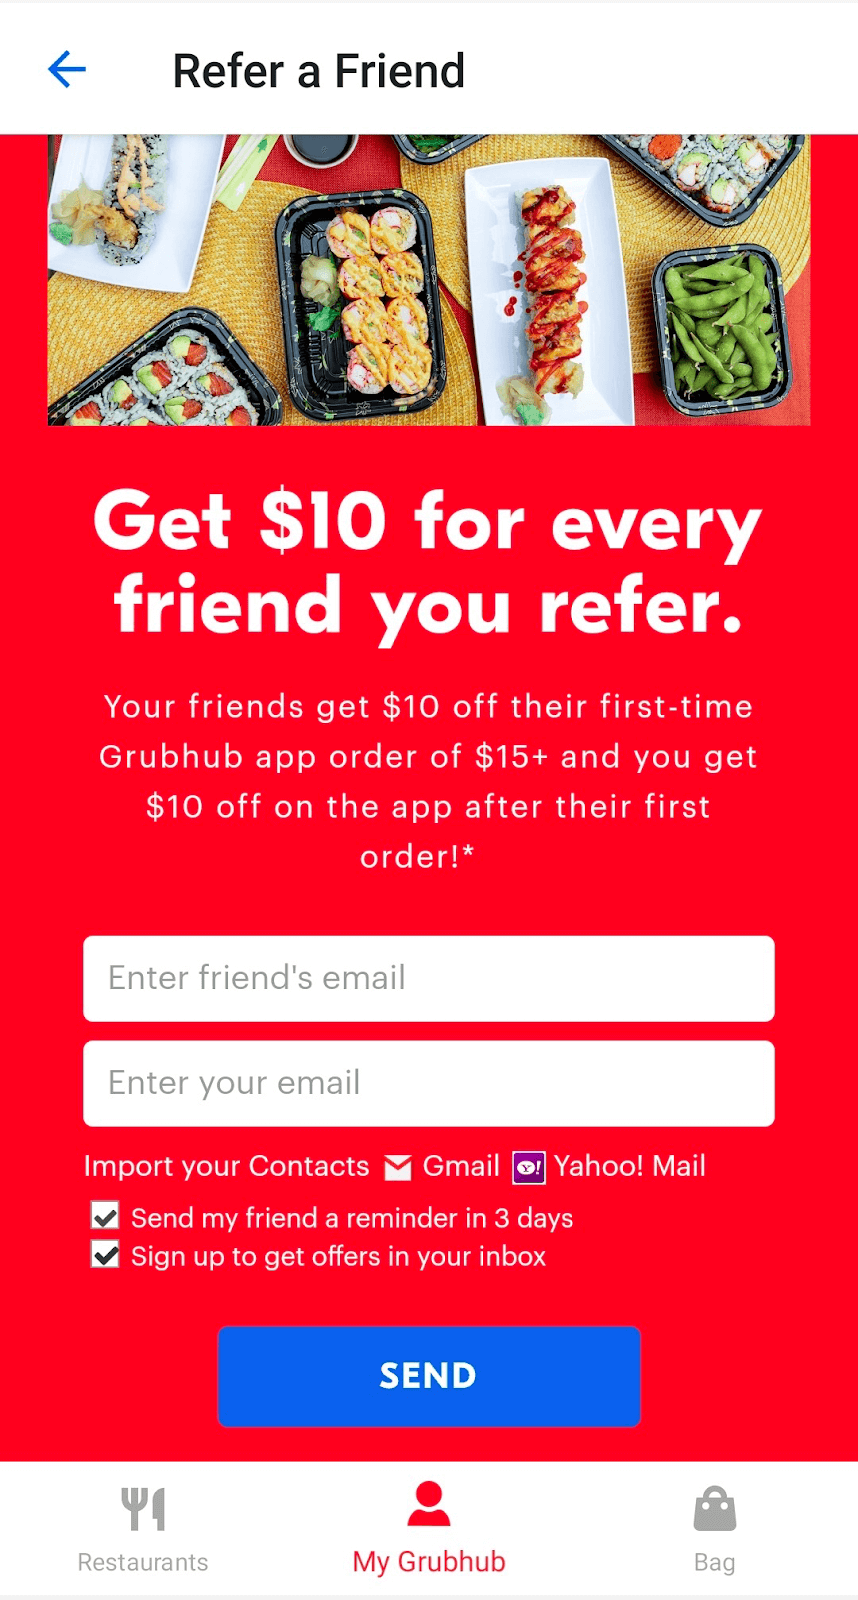 Send referral to friend to get Grubhub deals